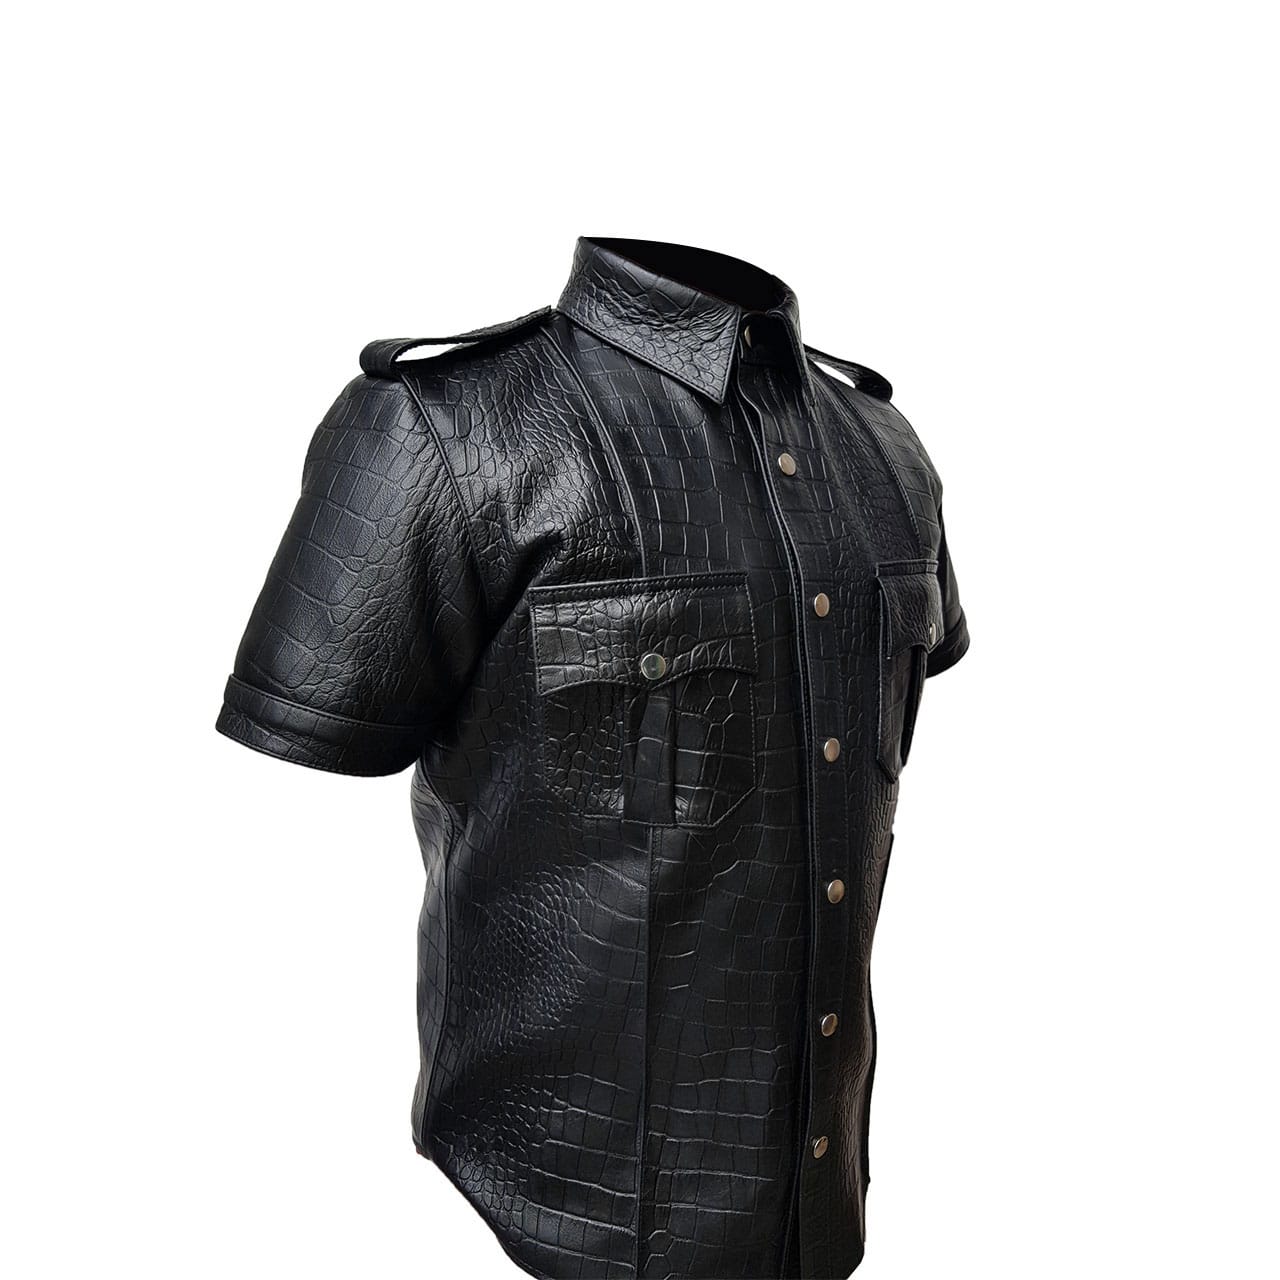 Mens Police Uniform Style Crocodile Print Leather Shirt - PSHS-BLK